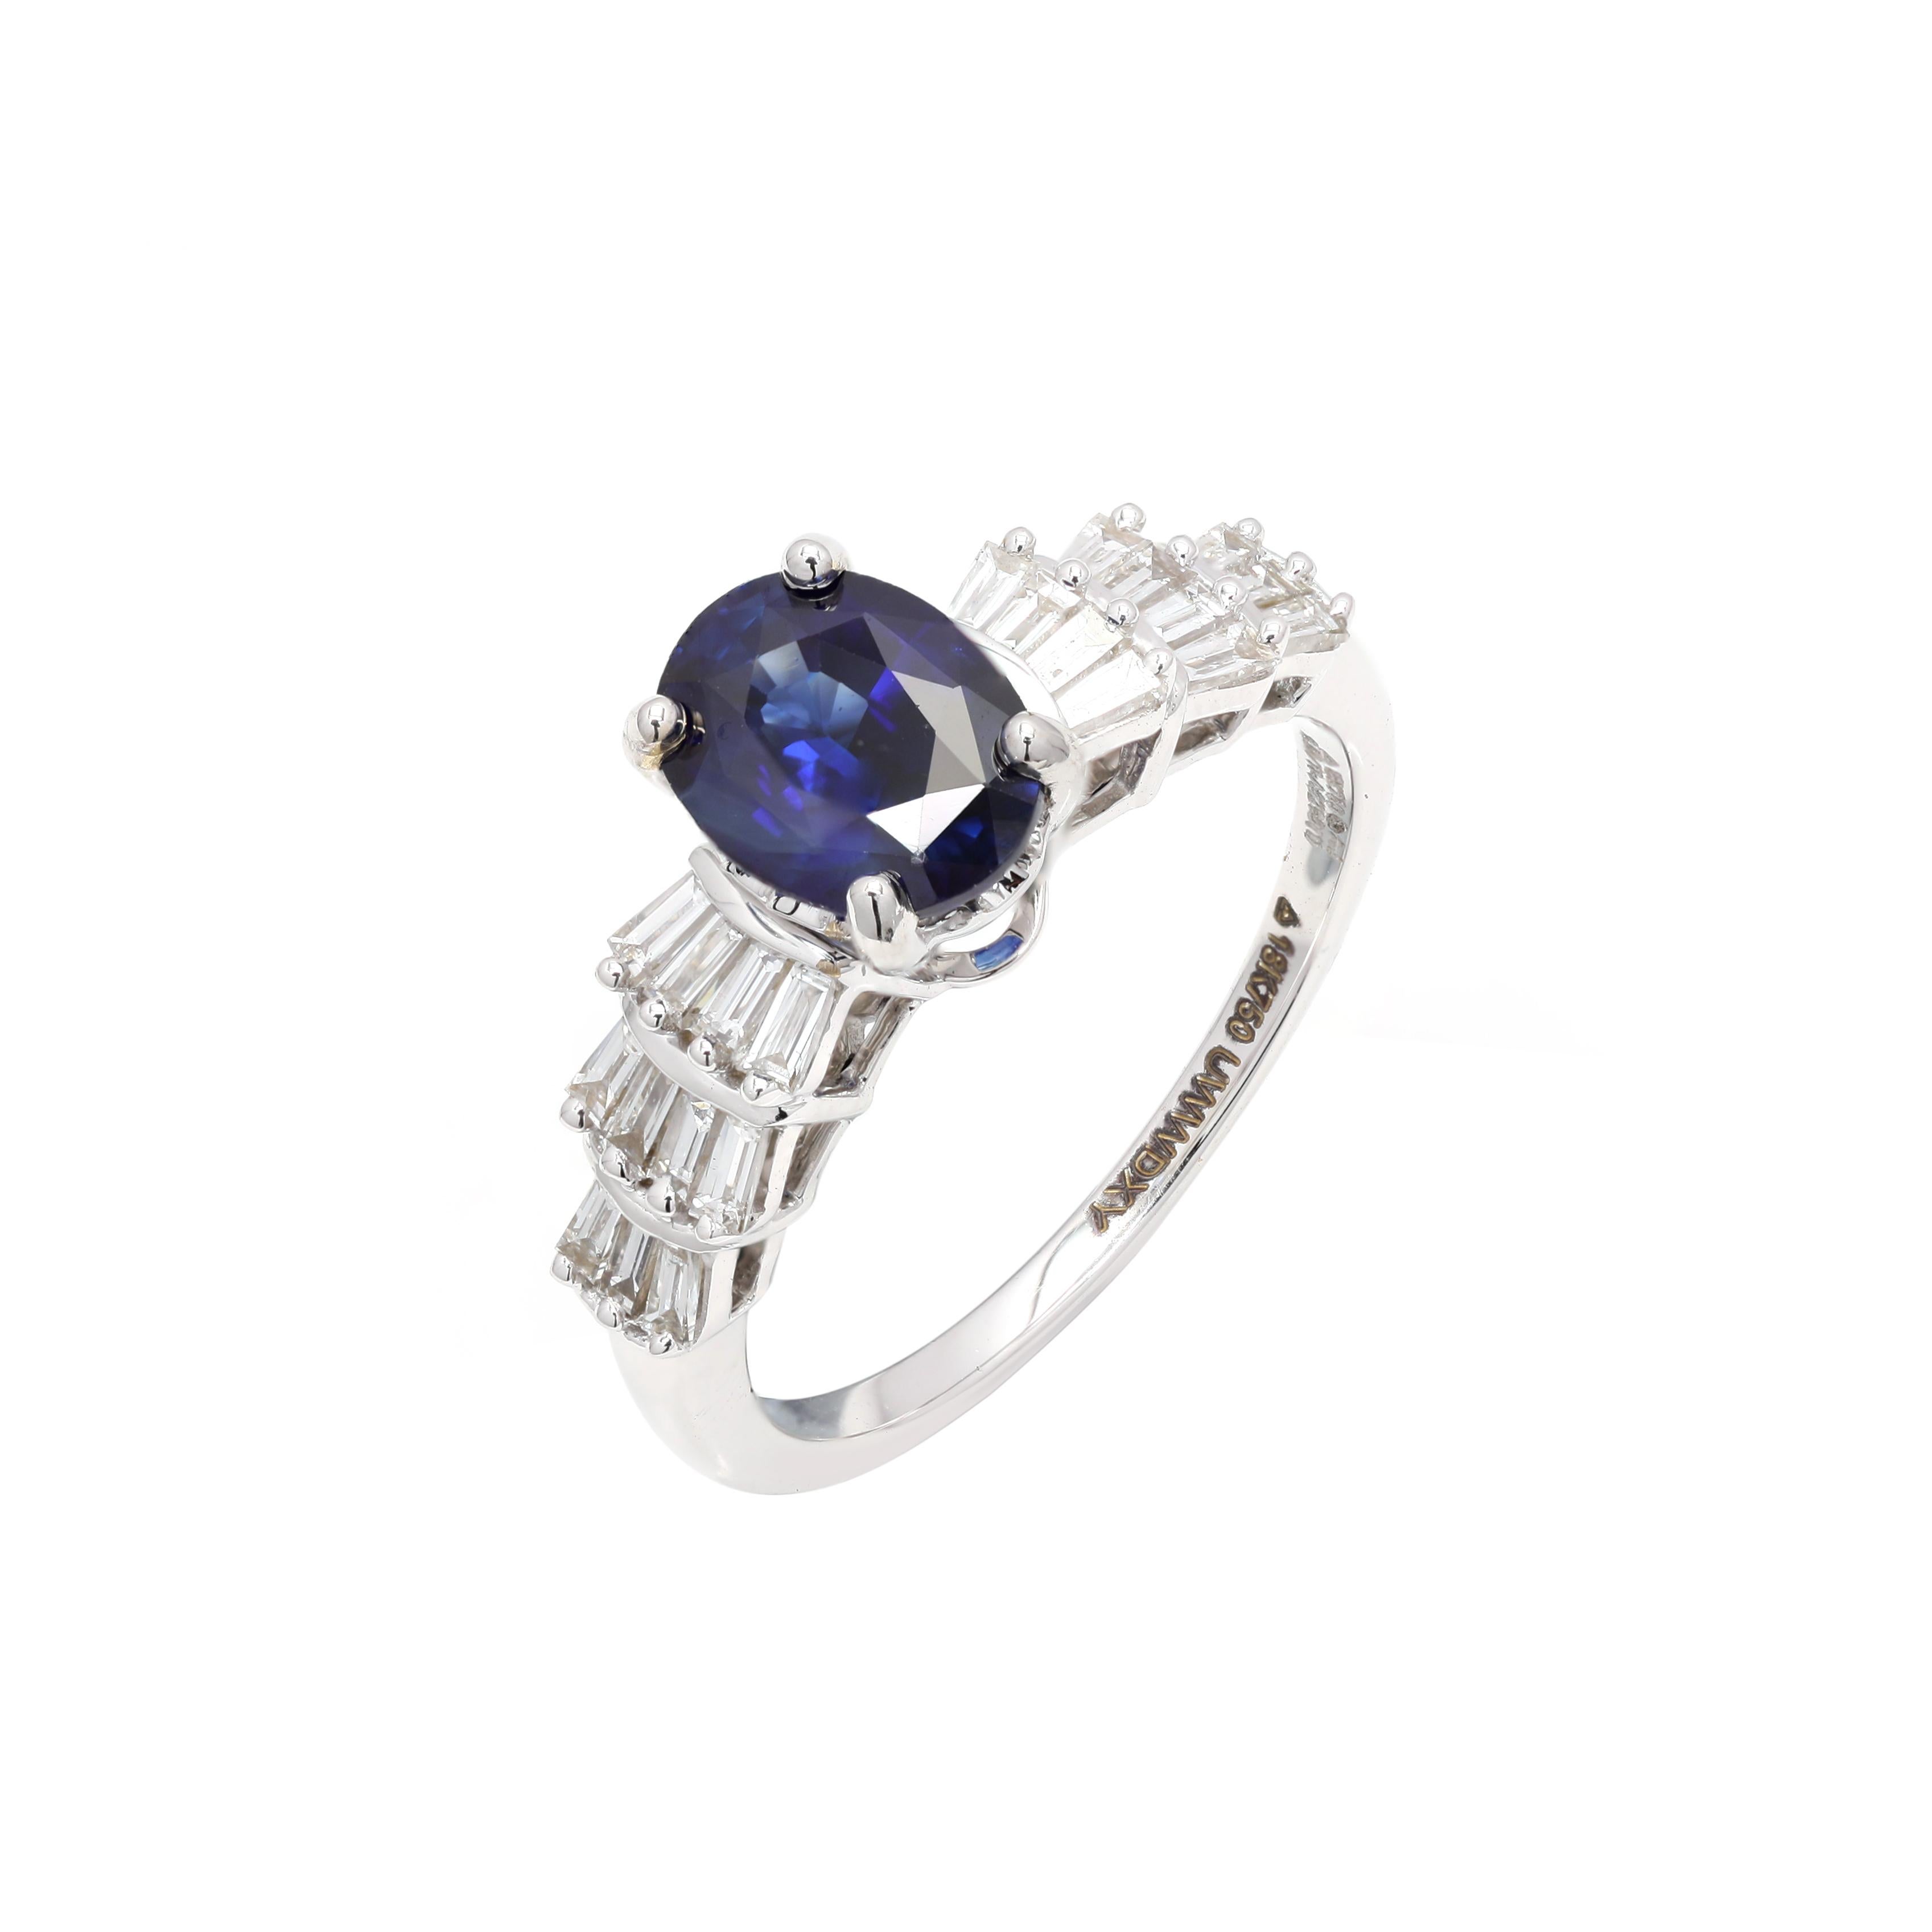 For Sale:  Elegant Blue Sapphire and Diamond Baguette Wedding Ring in 18k White Gold 4